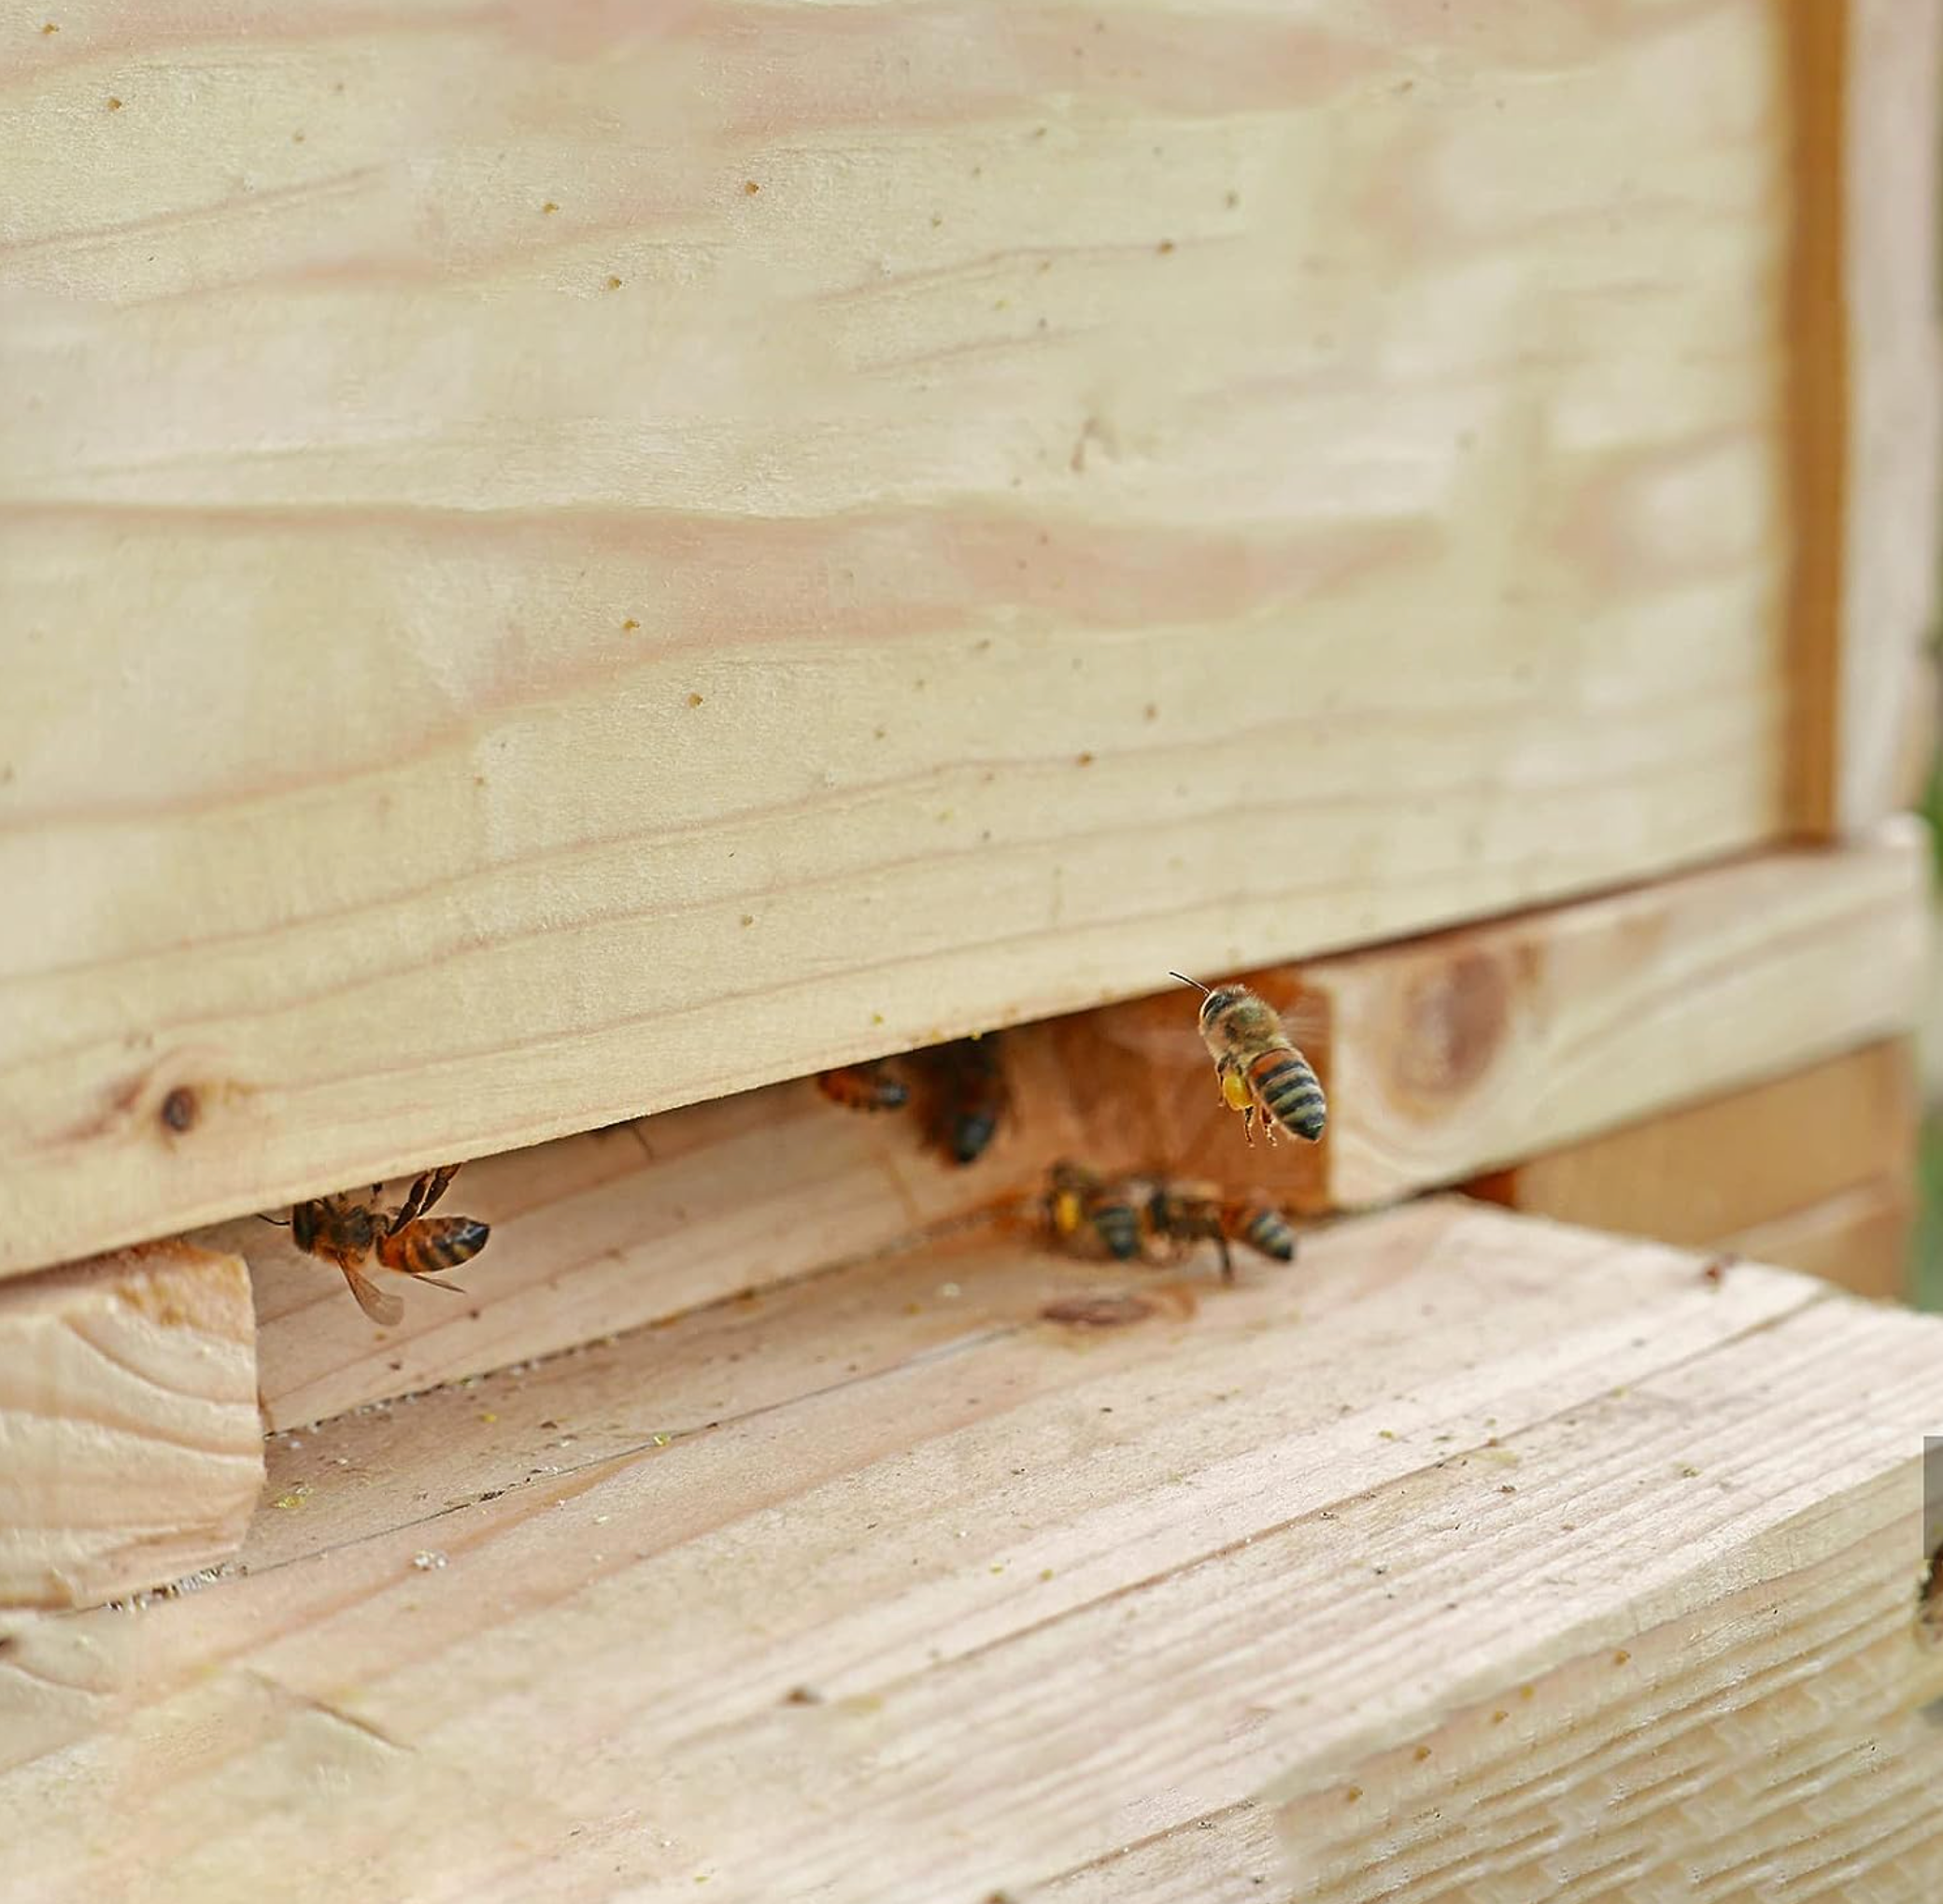 5 Pack Entrance Reducers For Langstroth Hives